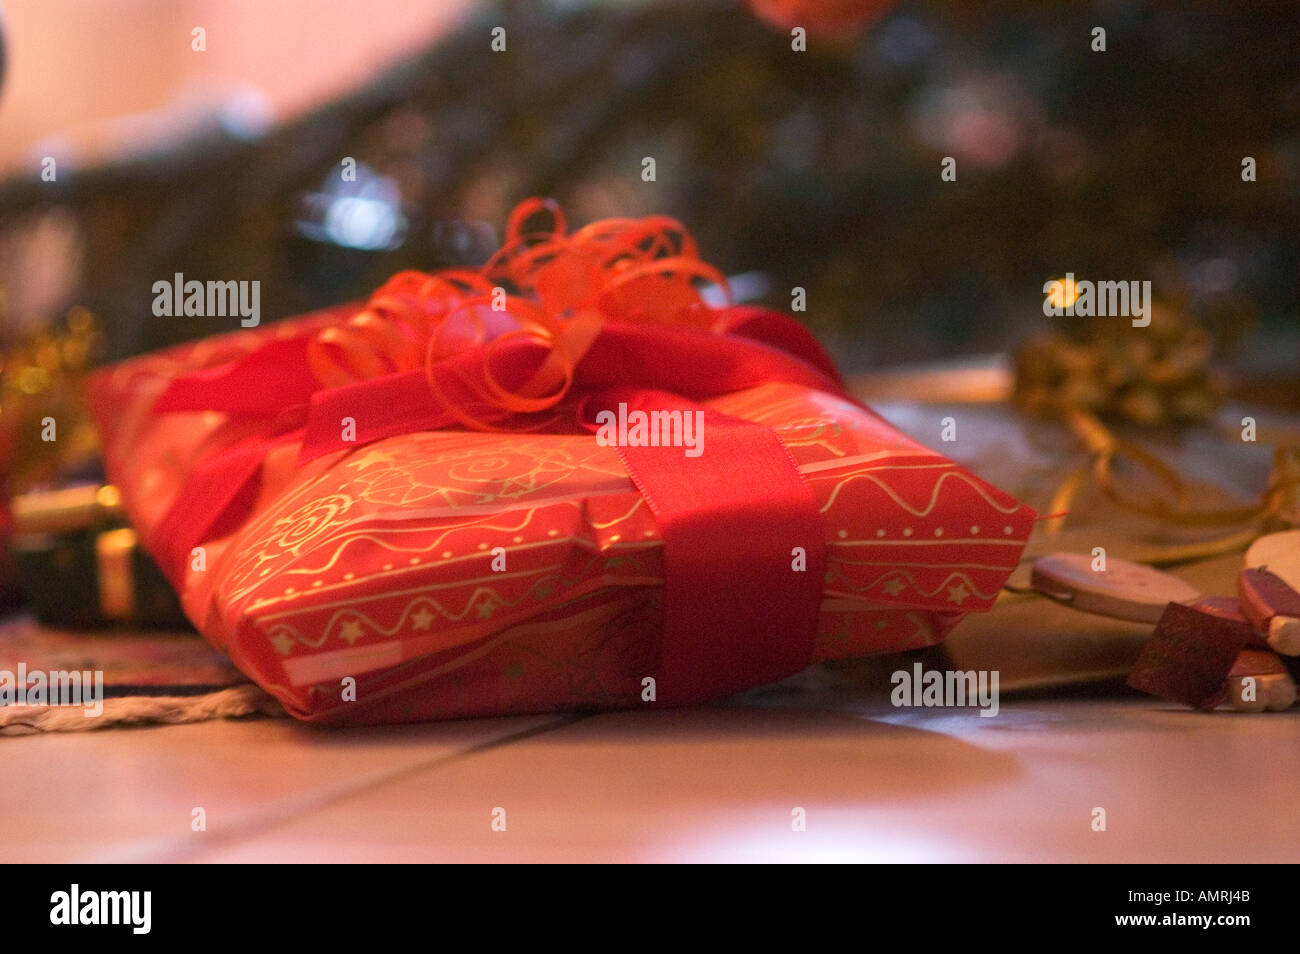 Weihnachten Geschenke Unter dem Christbaum Noël : des cadeaux sous l'arbre Banque D'Images